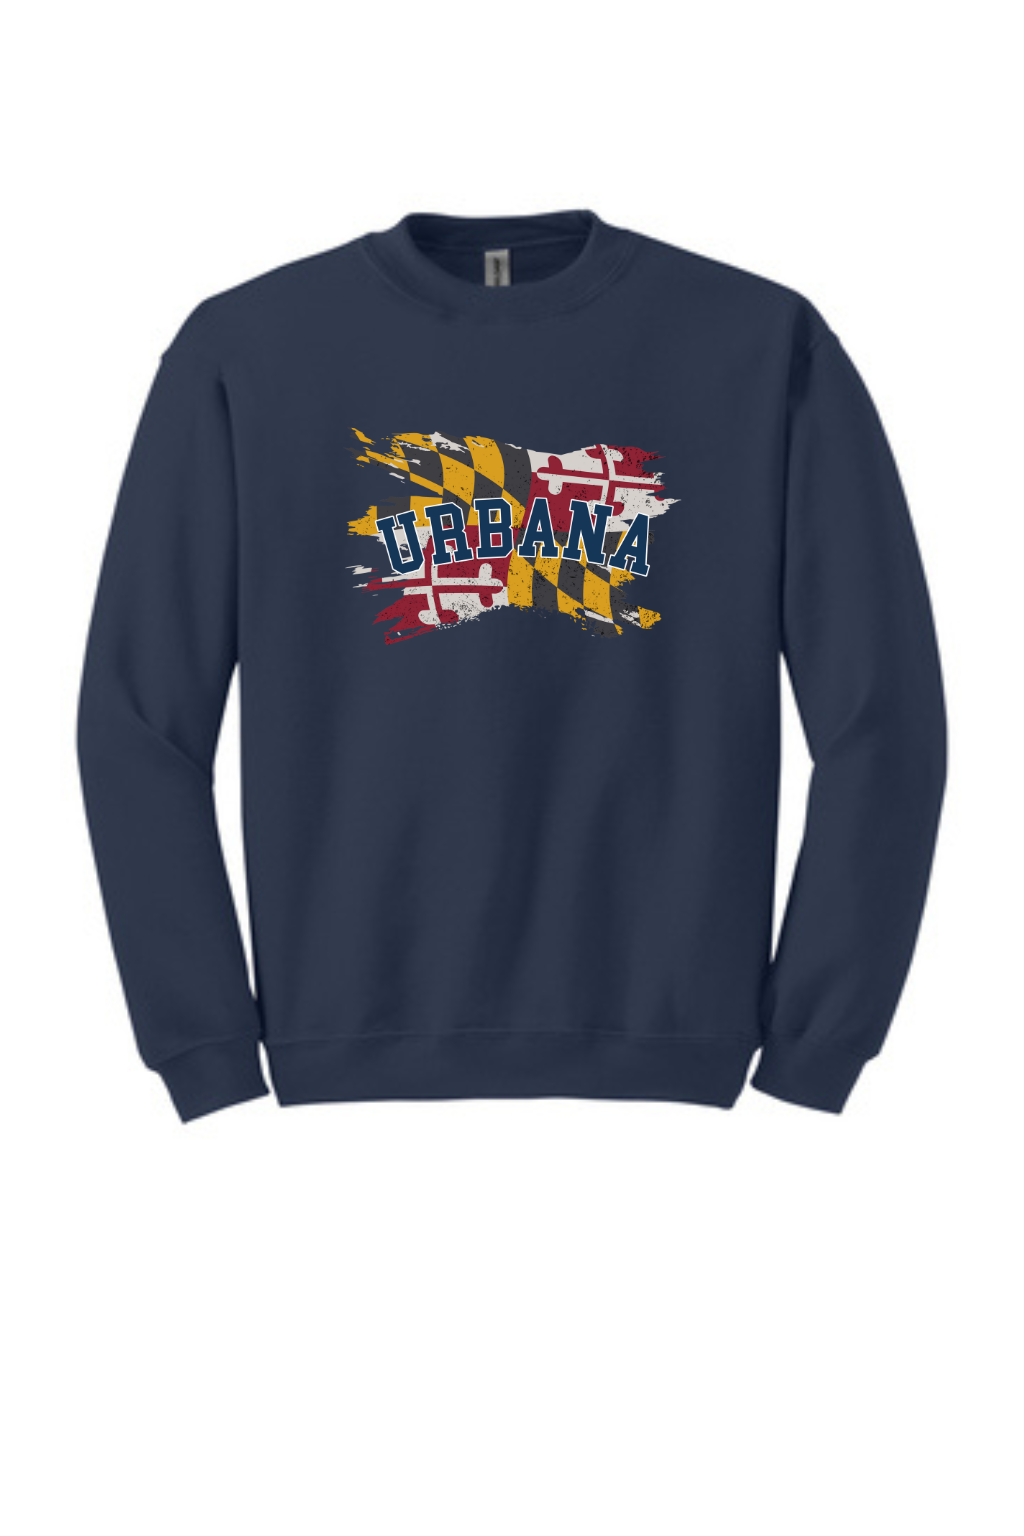 Maryland Urbana Hoodie & Crew Sweatshirt (Adult & Youth)